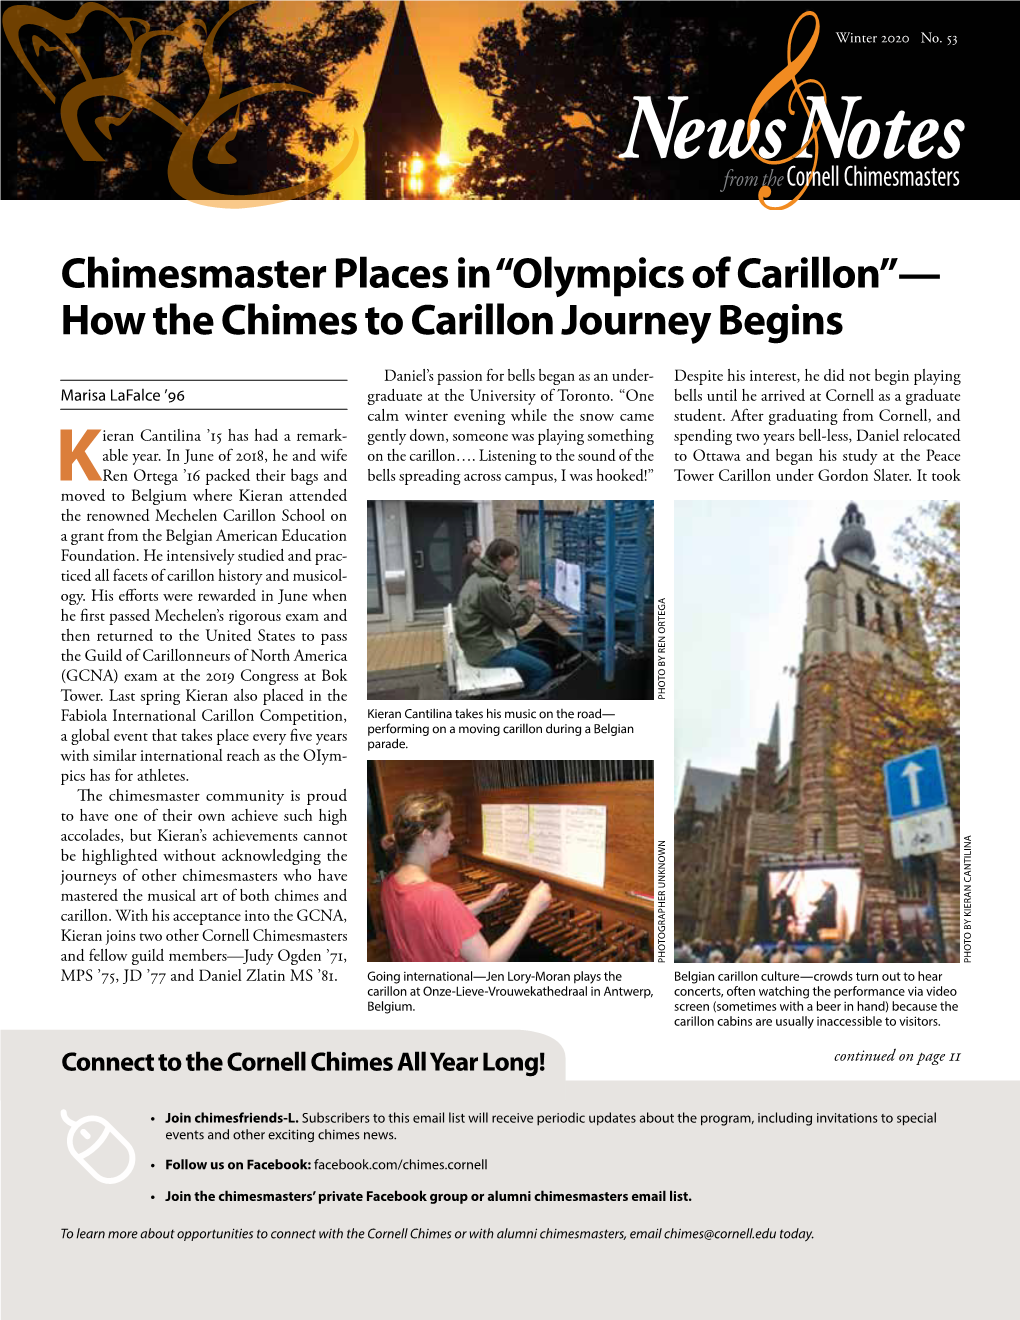 Cornell Chimes Newsletter Winter 2020